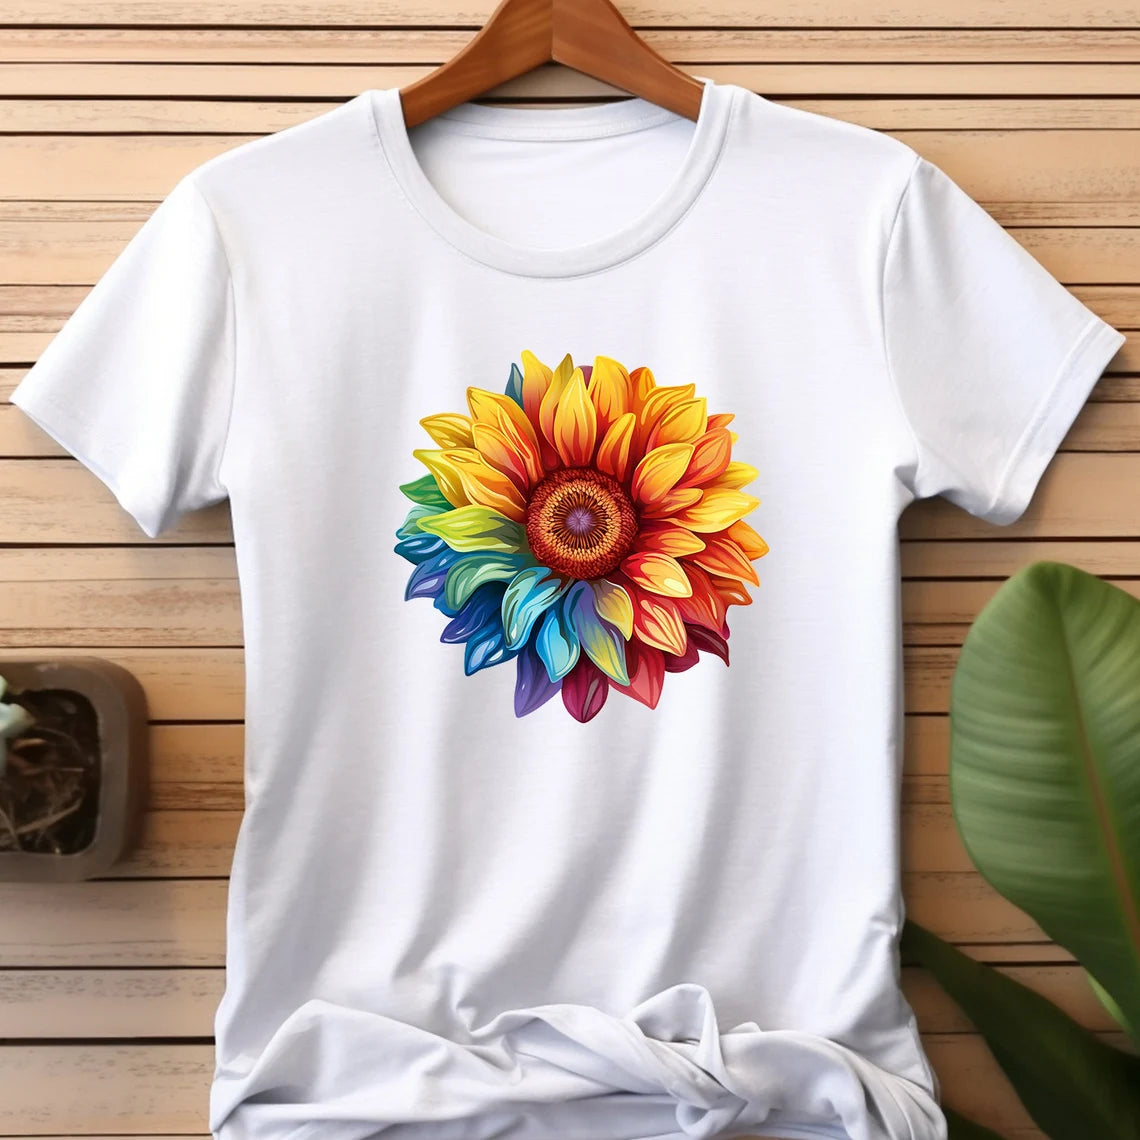 Sunflower Shirt, Flower Print Shirt, Colorful Sunflower Shirt, Floral Shirt, LGBT Shirt, Pride Shirt, Trans Pride,Gay Pride Awareness